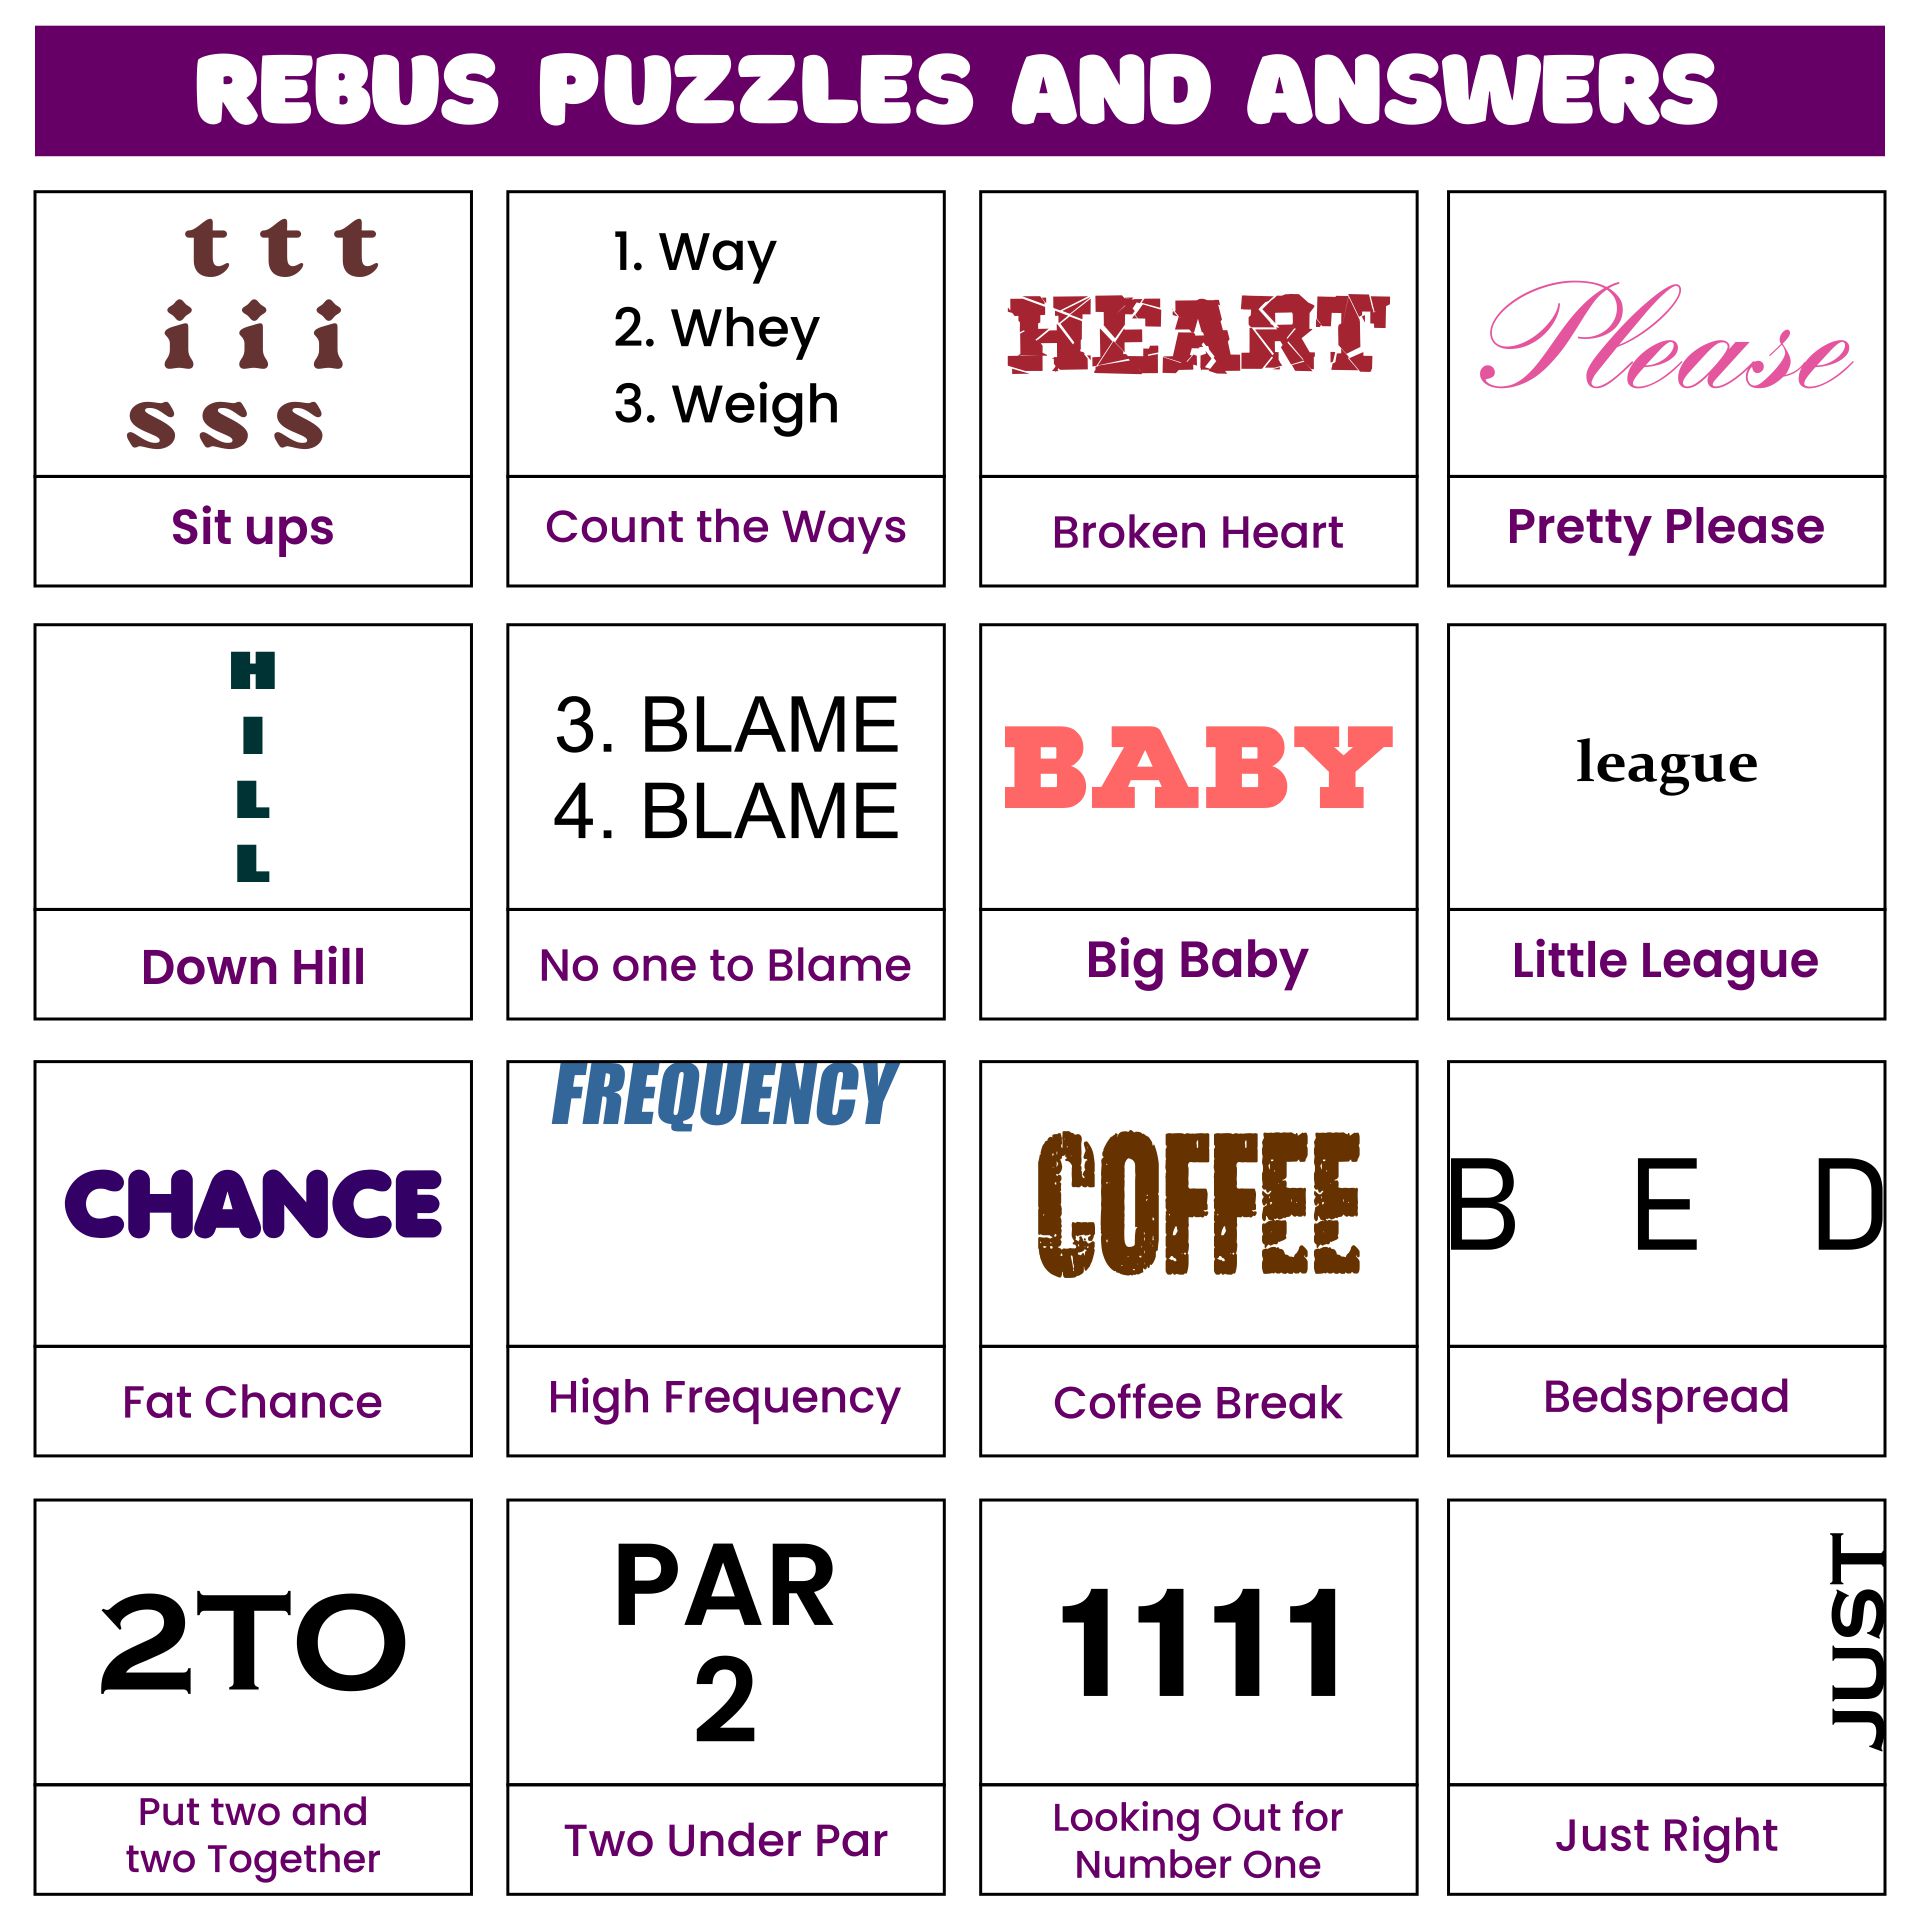 printable-rebus-puzzles